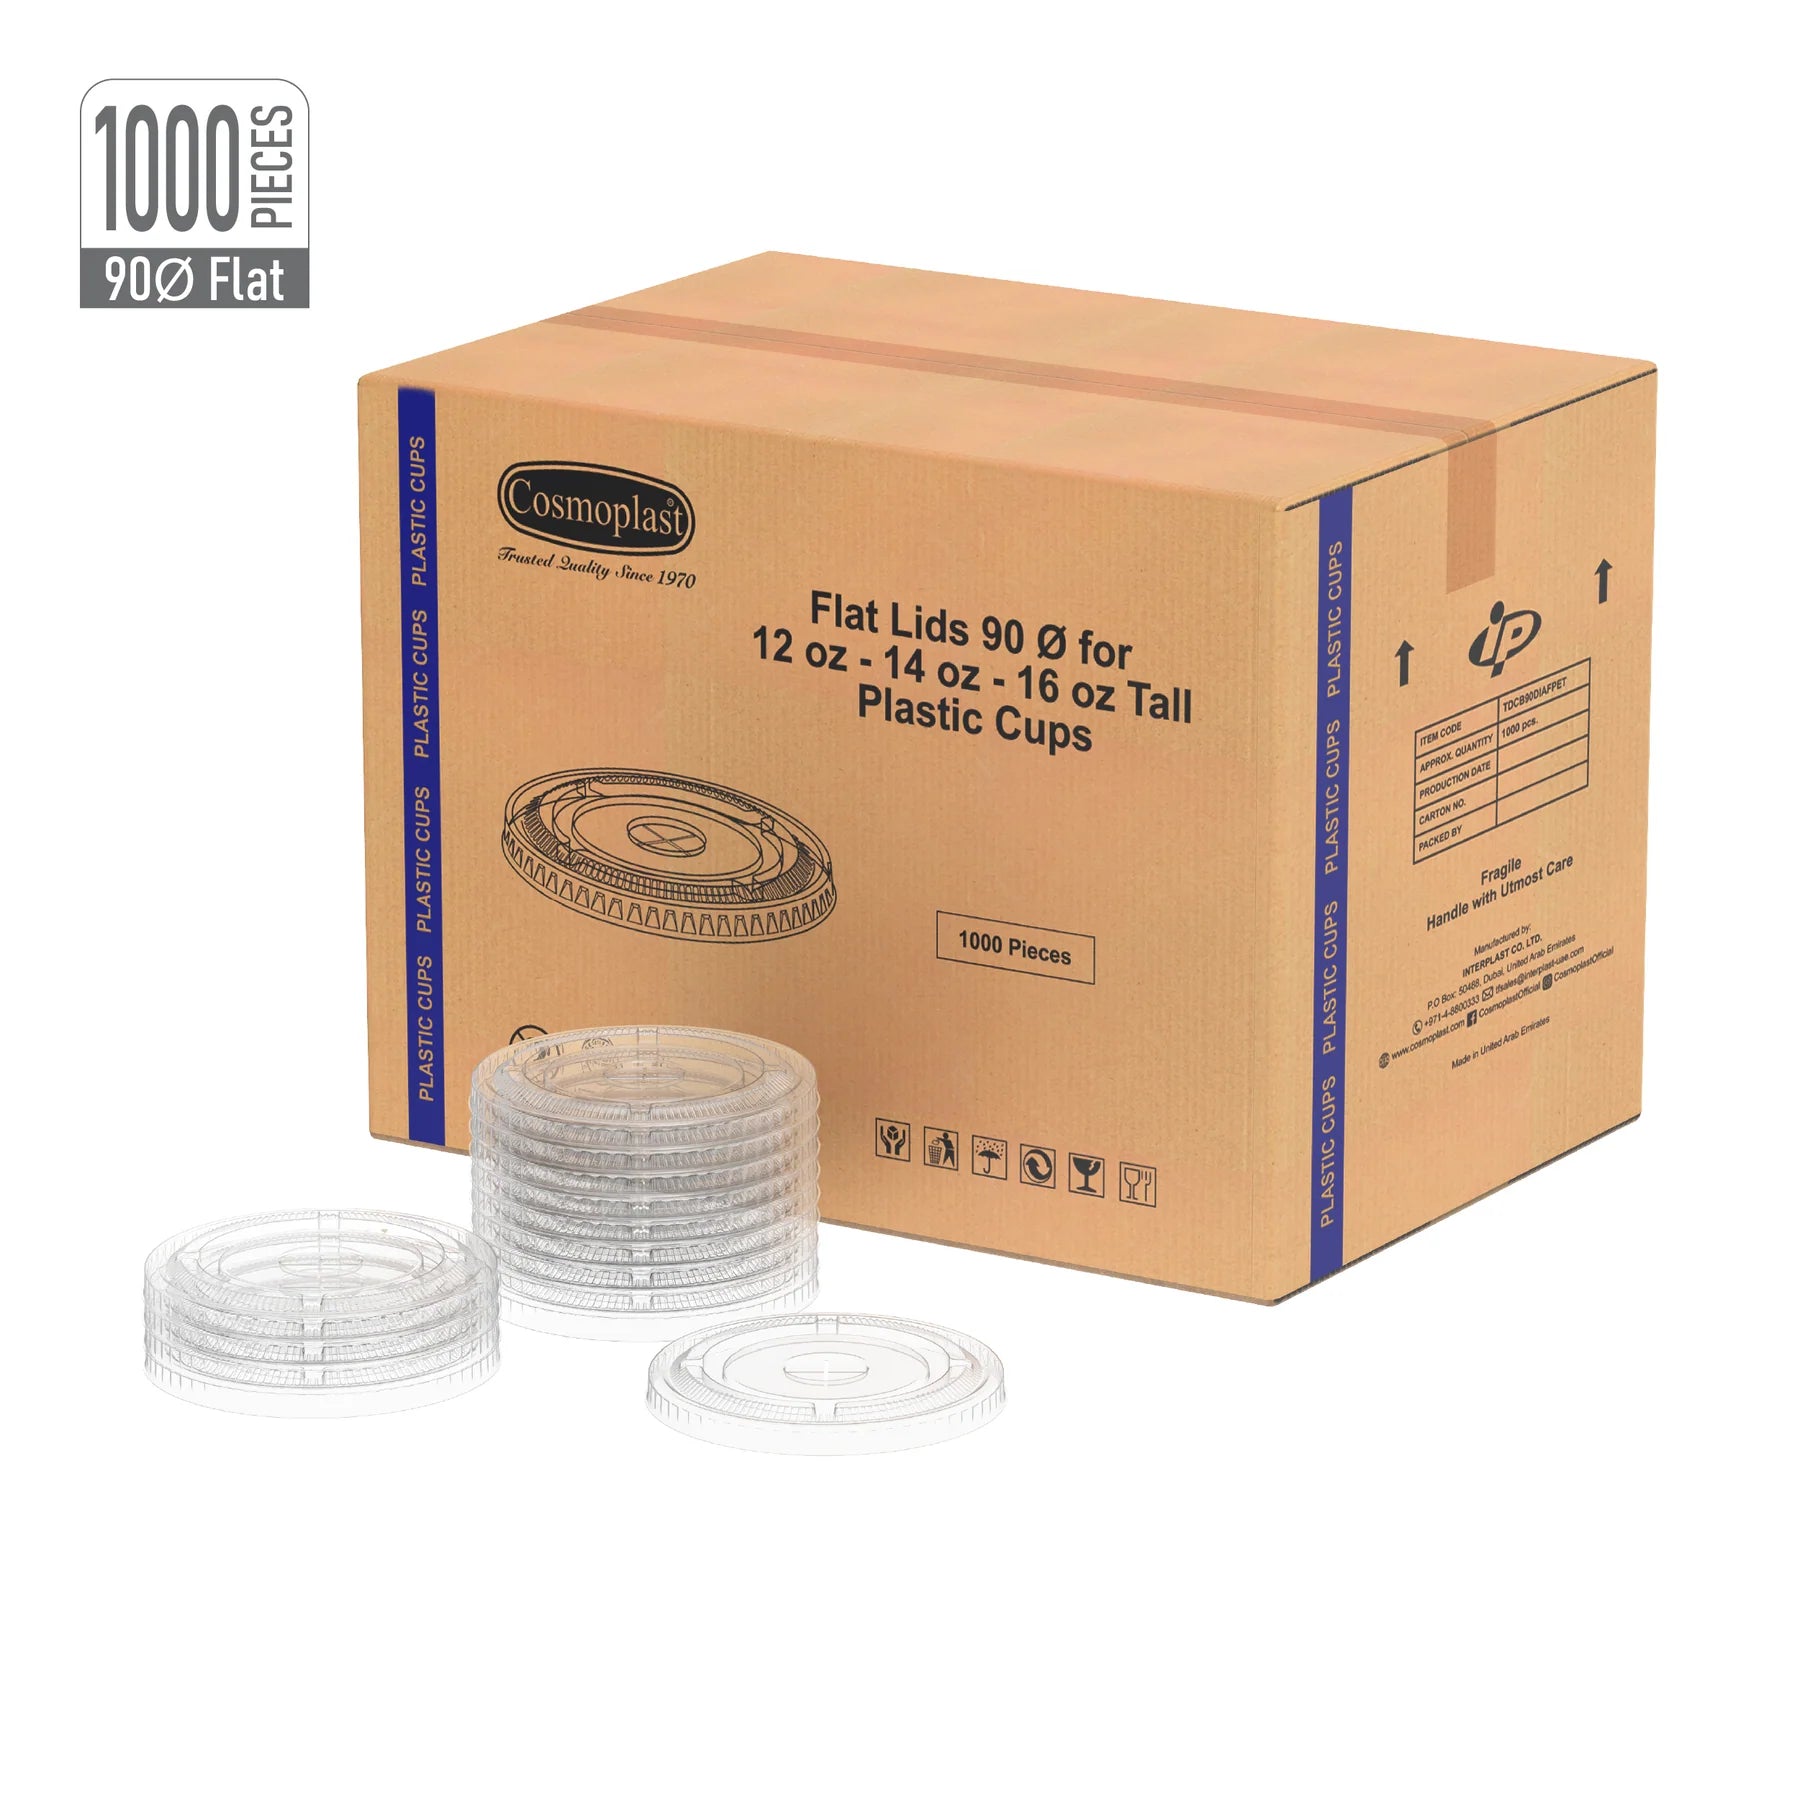 Wholesale Plastic Flat Lids 90 mm for Plastic Cups- Cosmoplast Oman